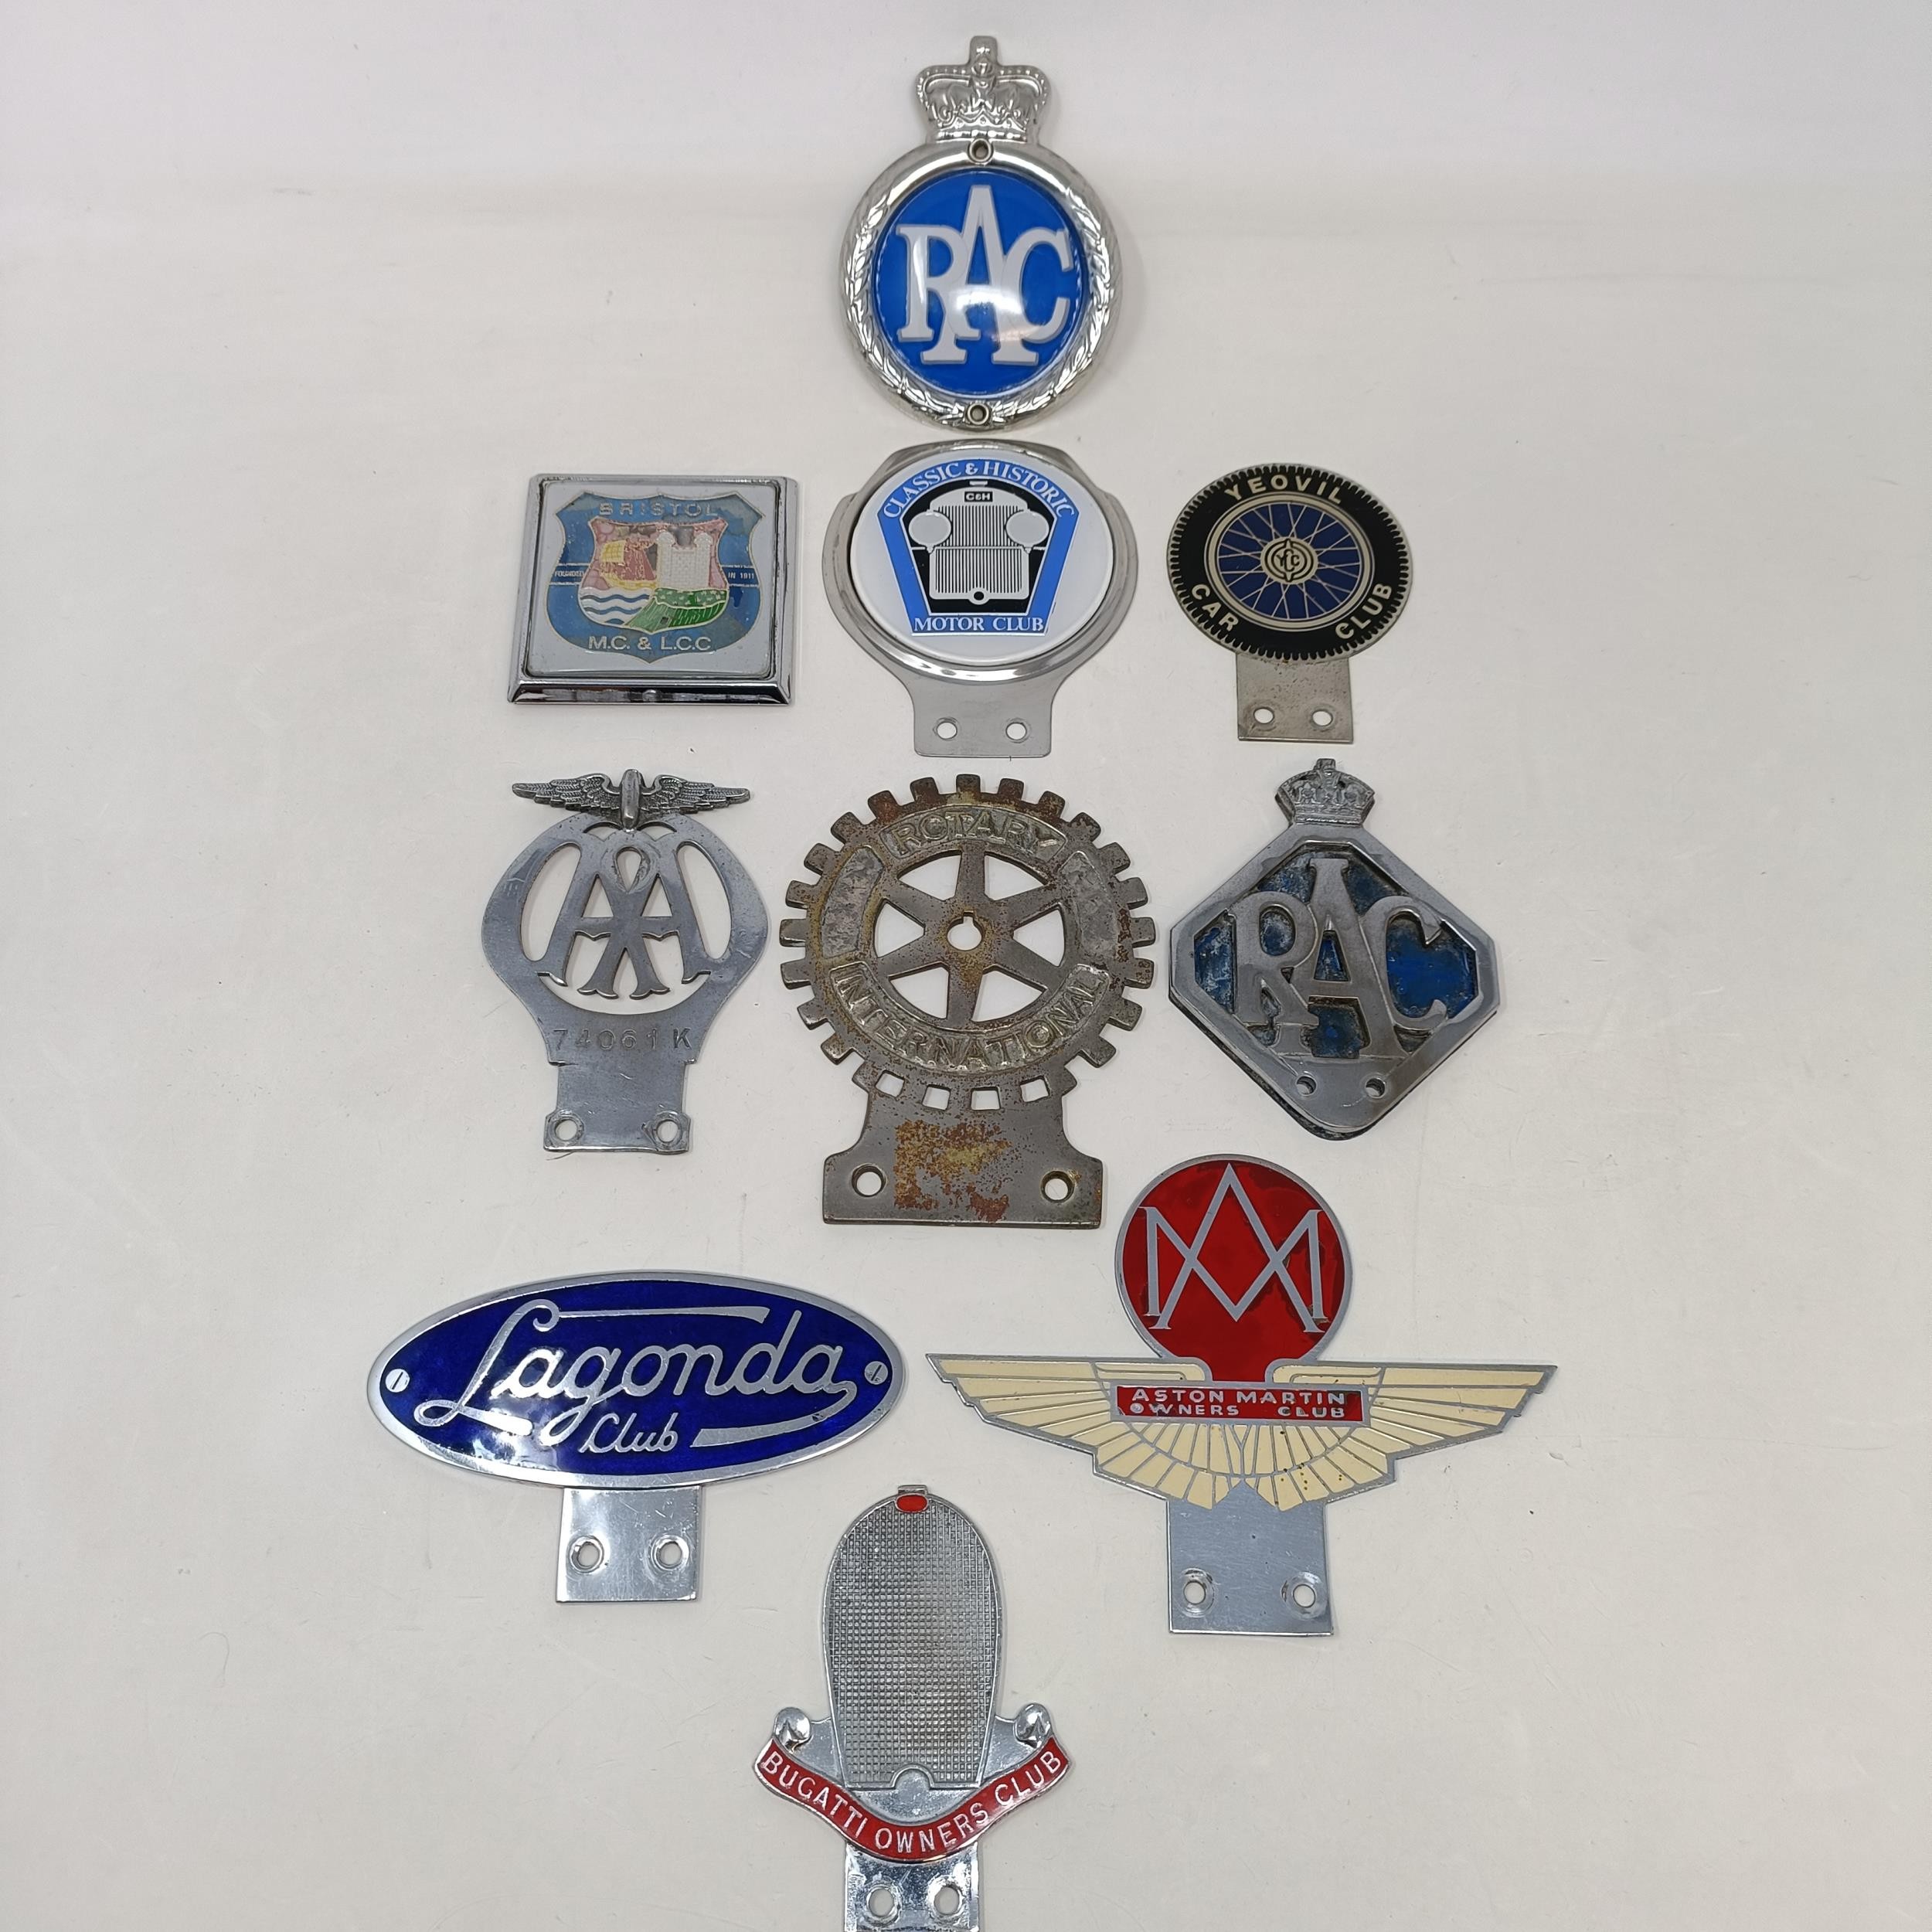 A Lagonda Club car badge, an Aston Martin car badge, and assorted other car badges (box)